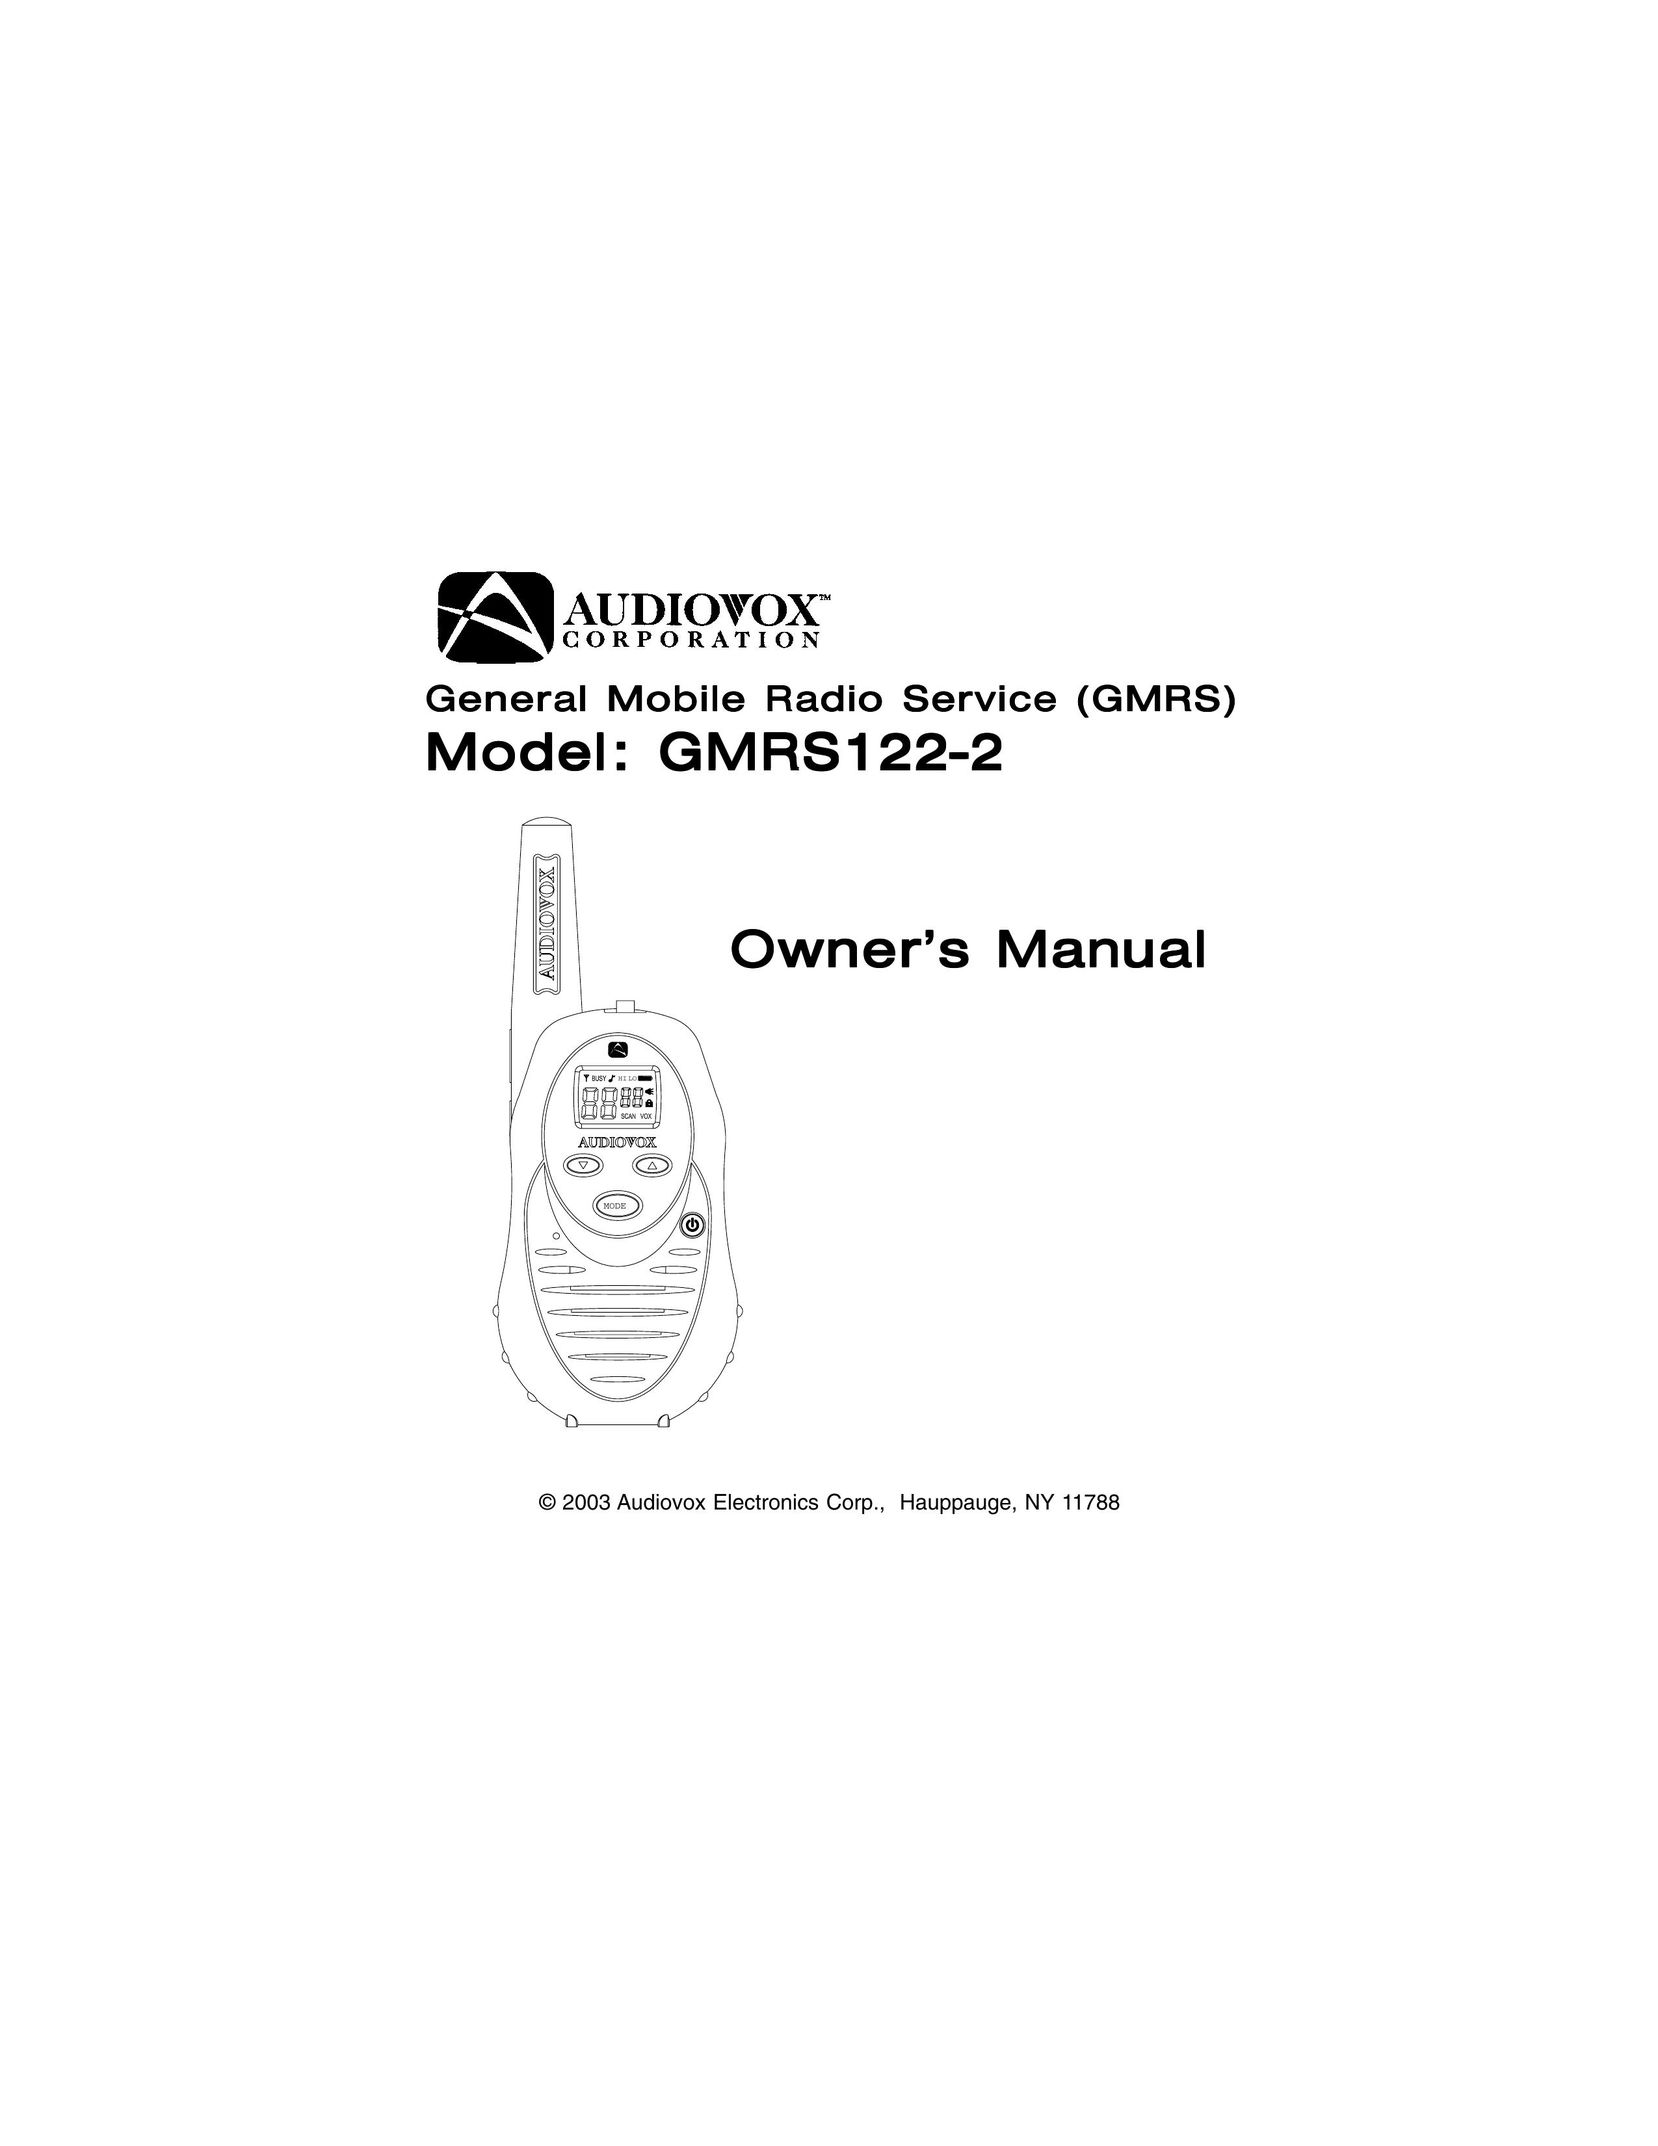 Audiovox GMRS122-2 Two-Way Radio User Manual